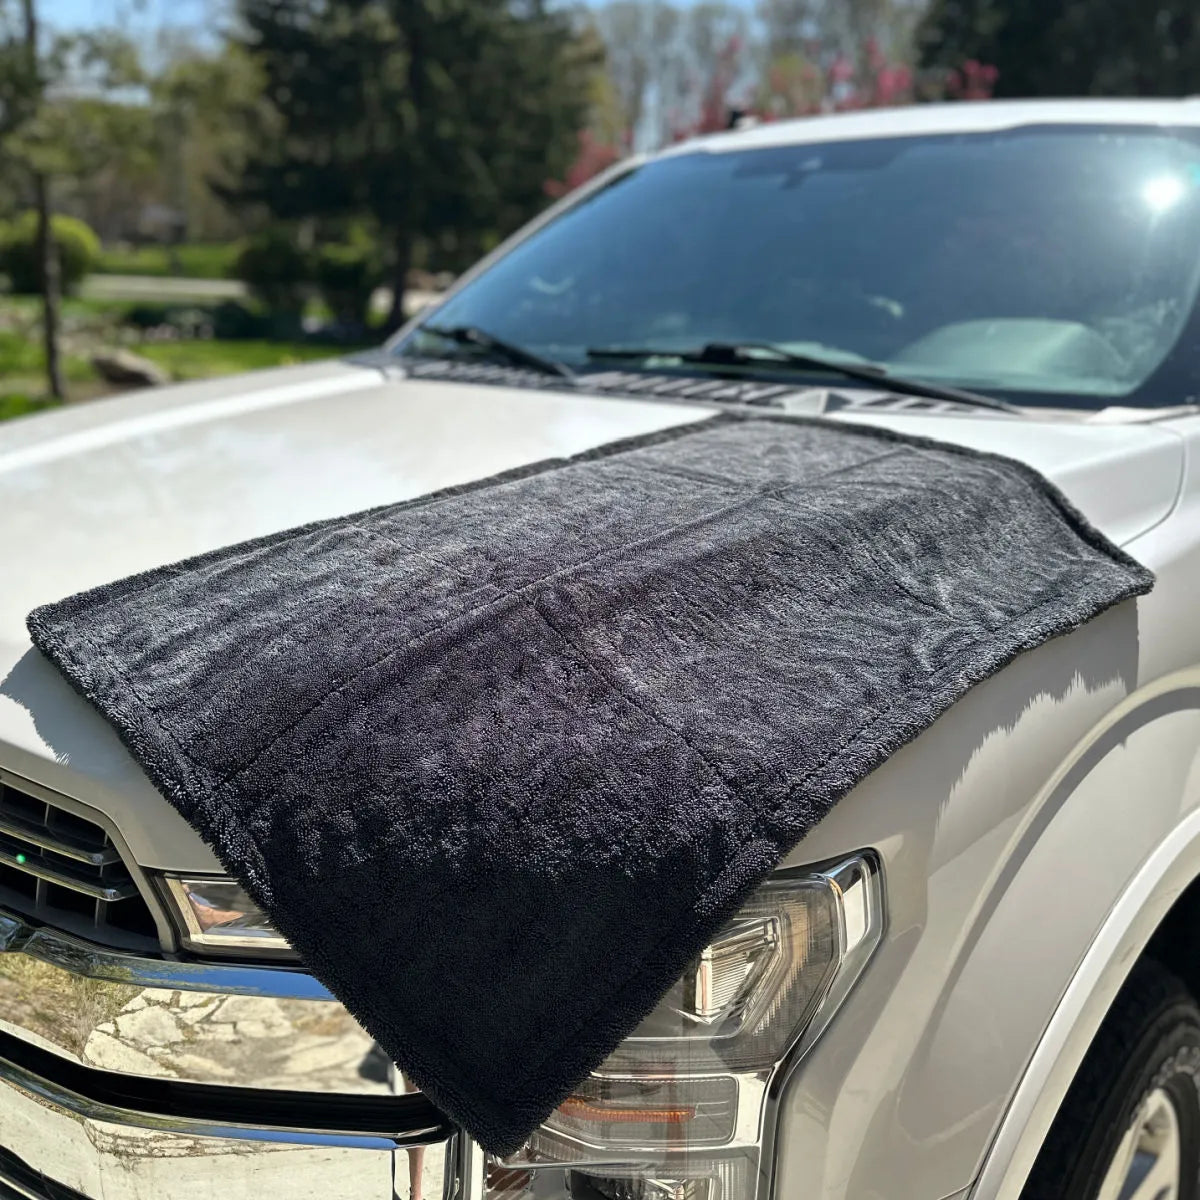 Ultra Car Drying Towel – Fox Clean